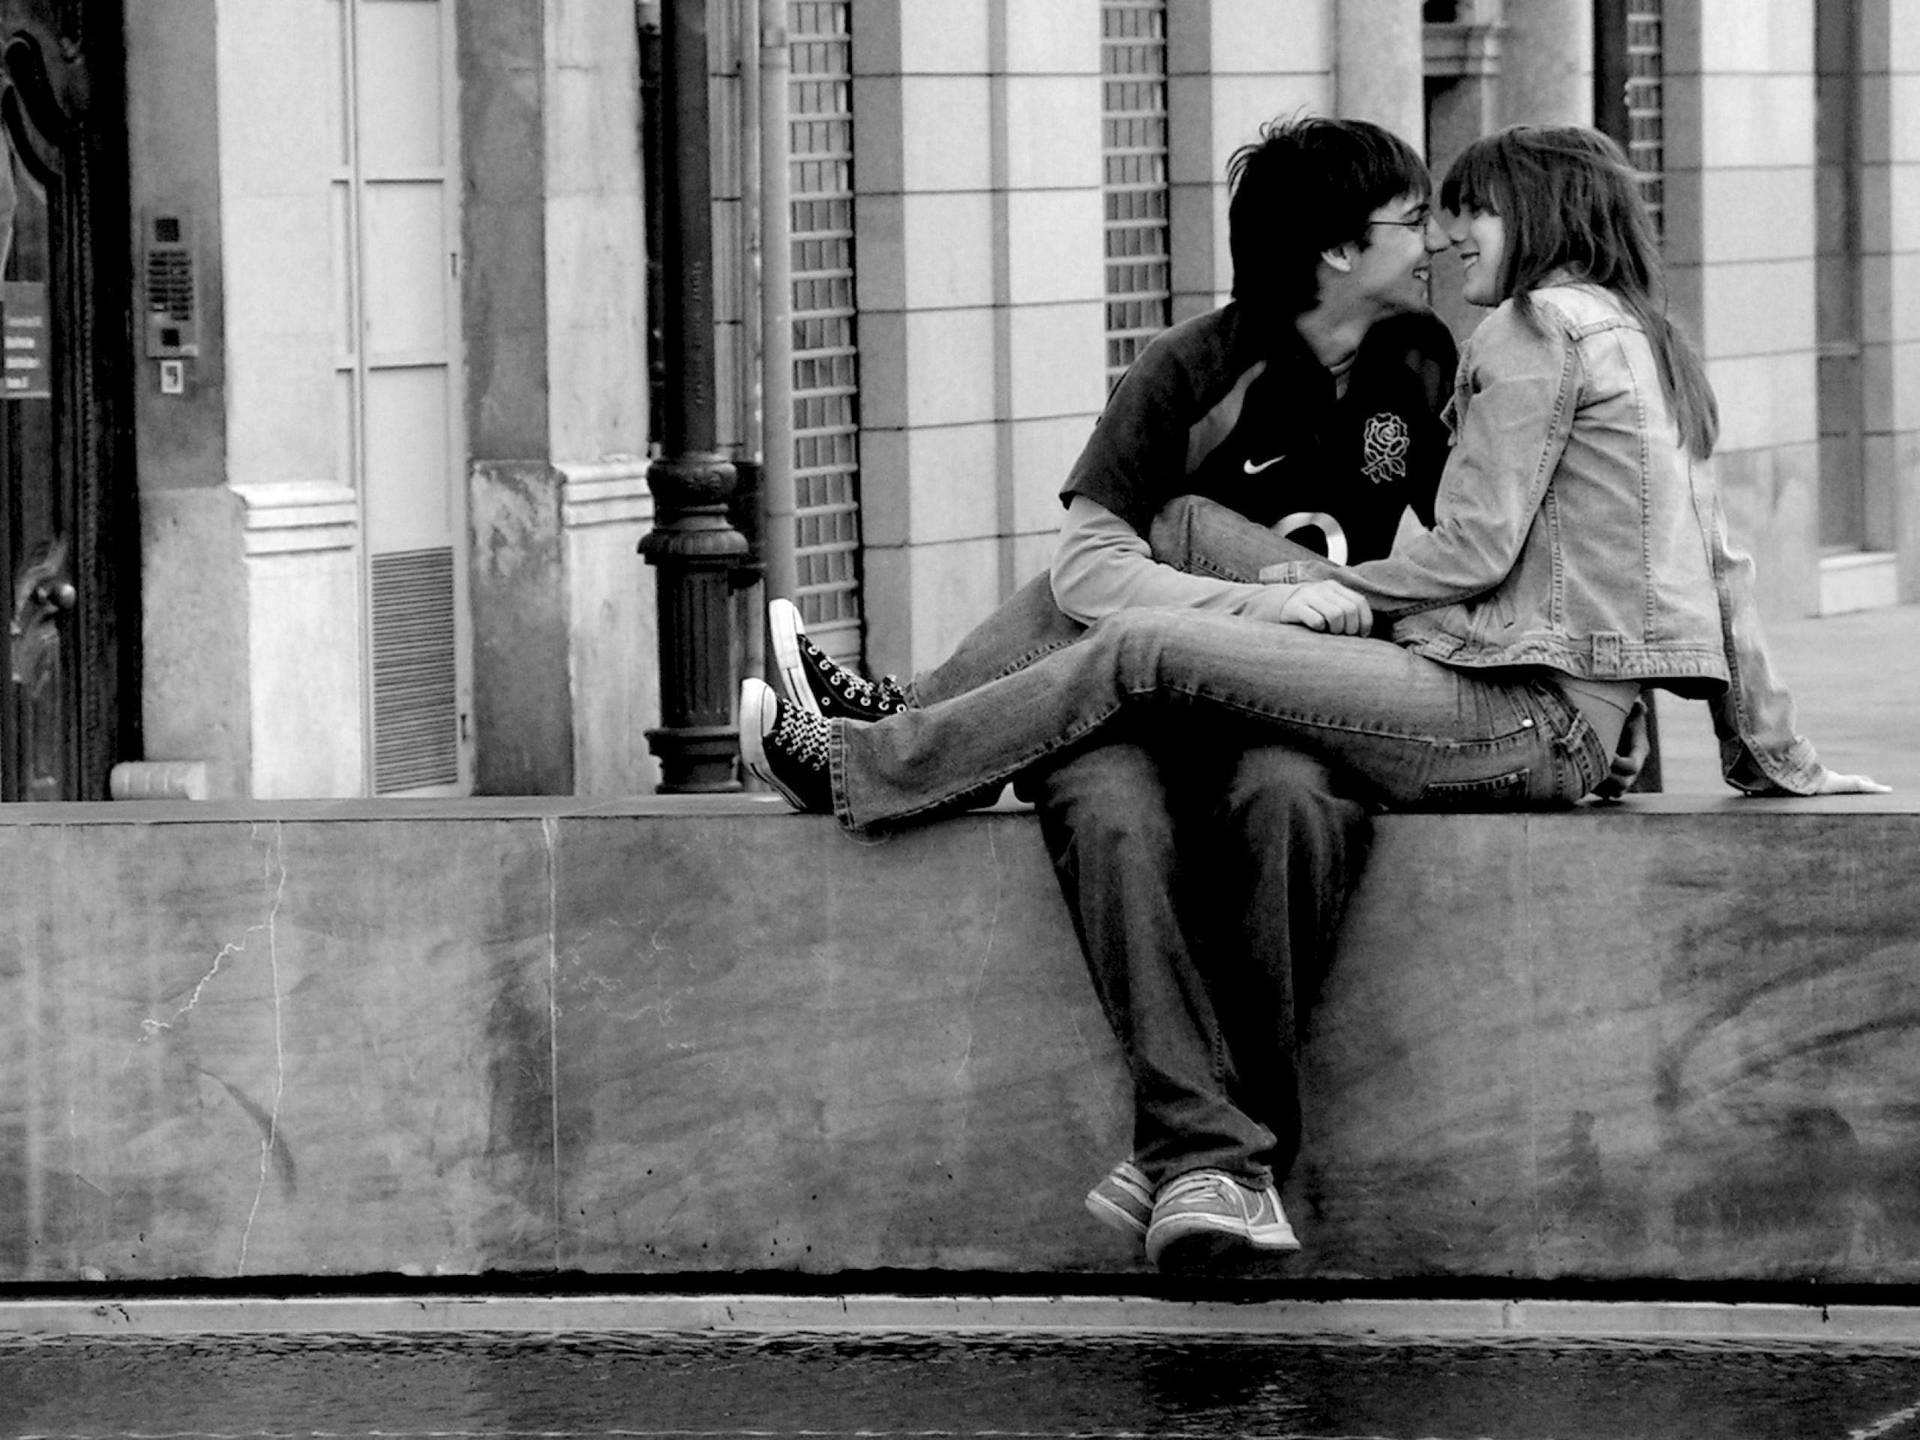 Couple Romantic Love In The City